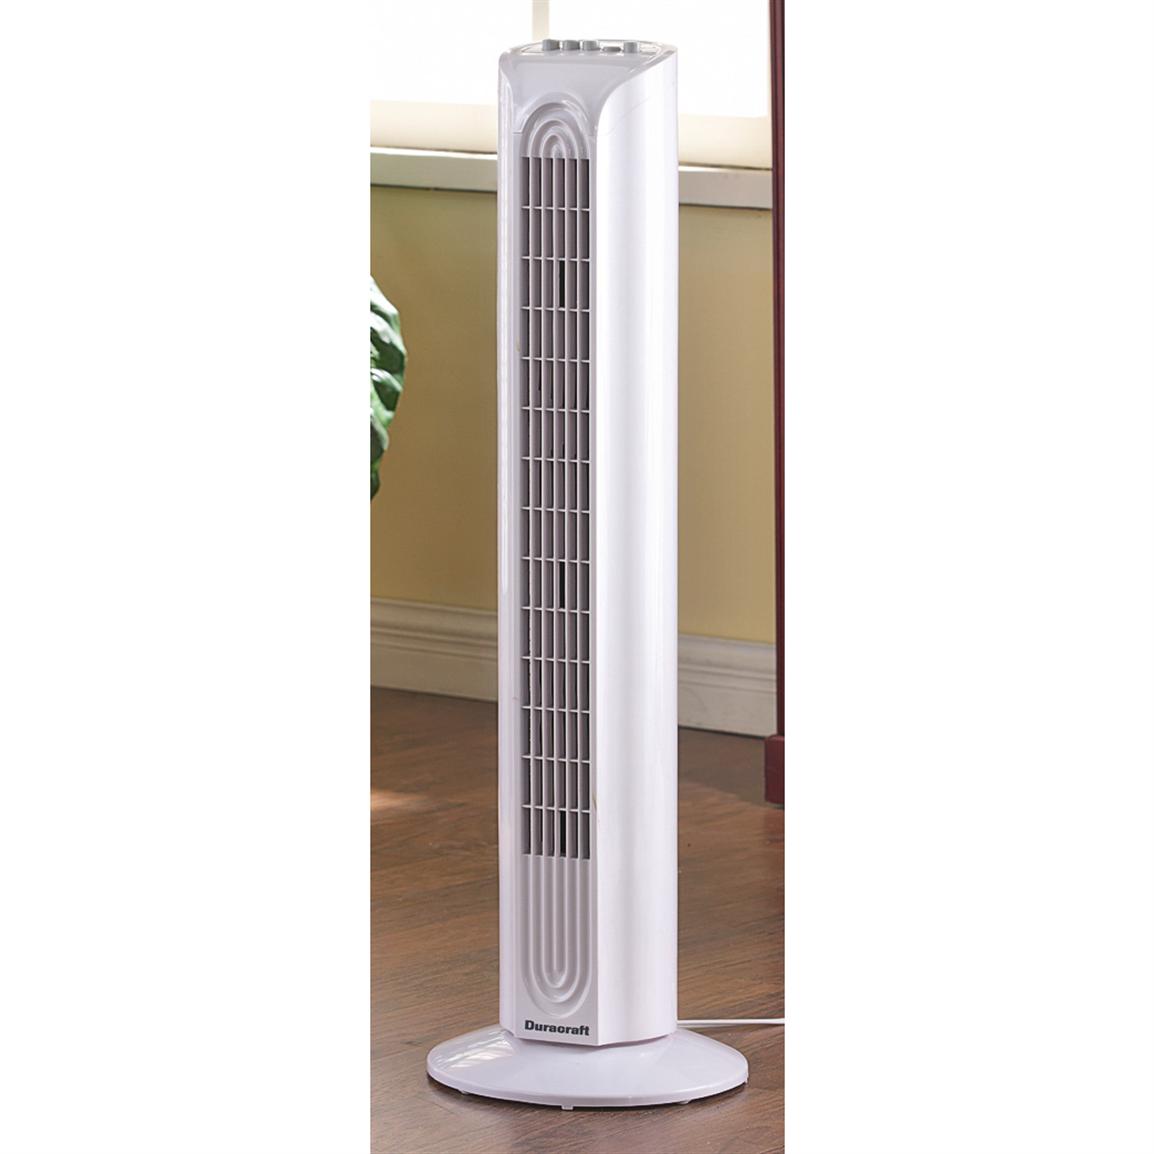 HoneywellÂ® Duracraft Oscillating Tower Fan, White - 162589, Healthy Living at Sportsman's Guide